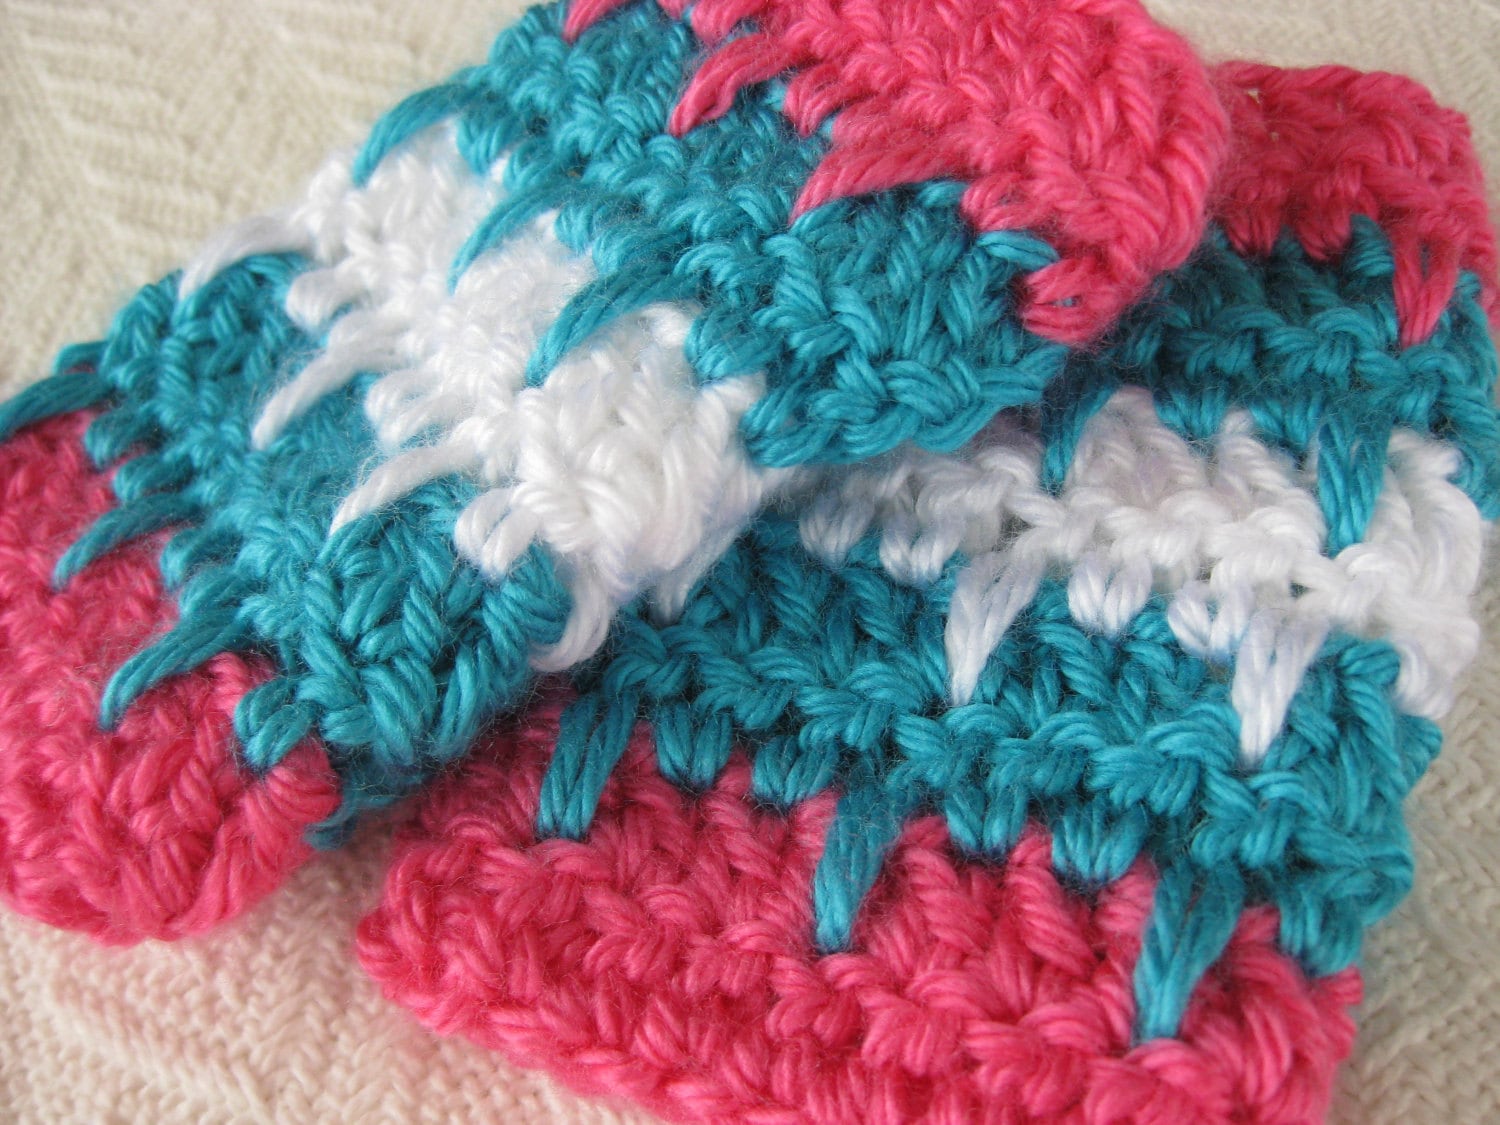 Fingerless Gloves Crochet pdf Pattern - Great for Beginners and